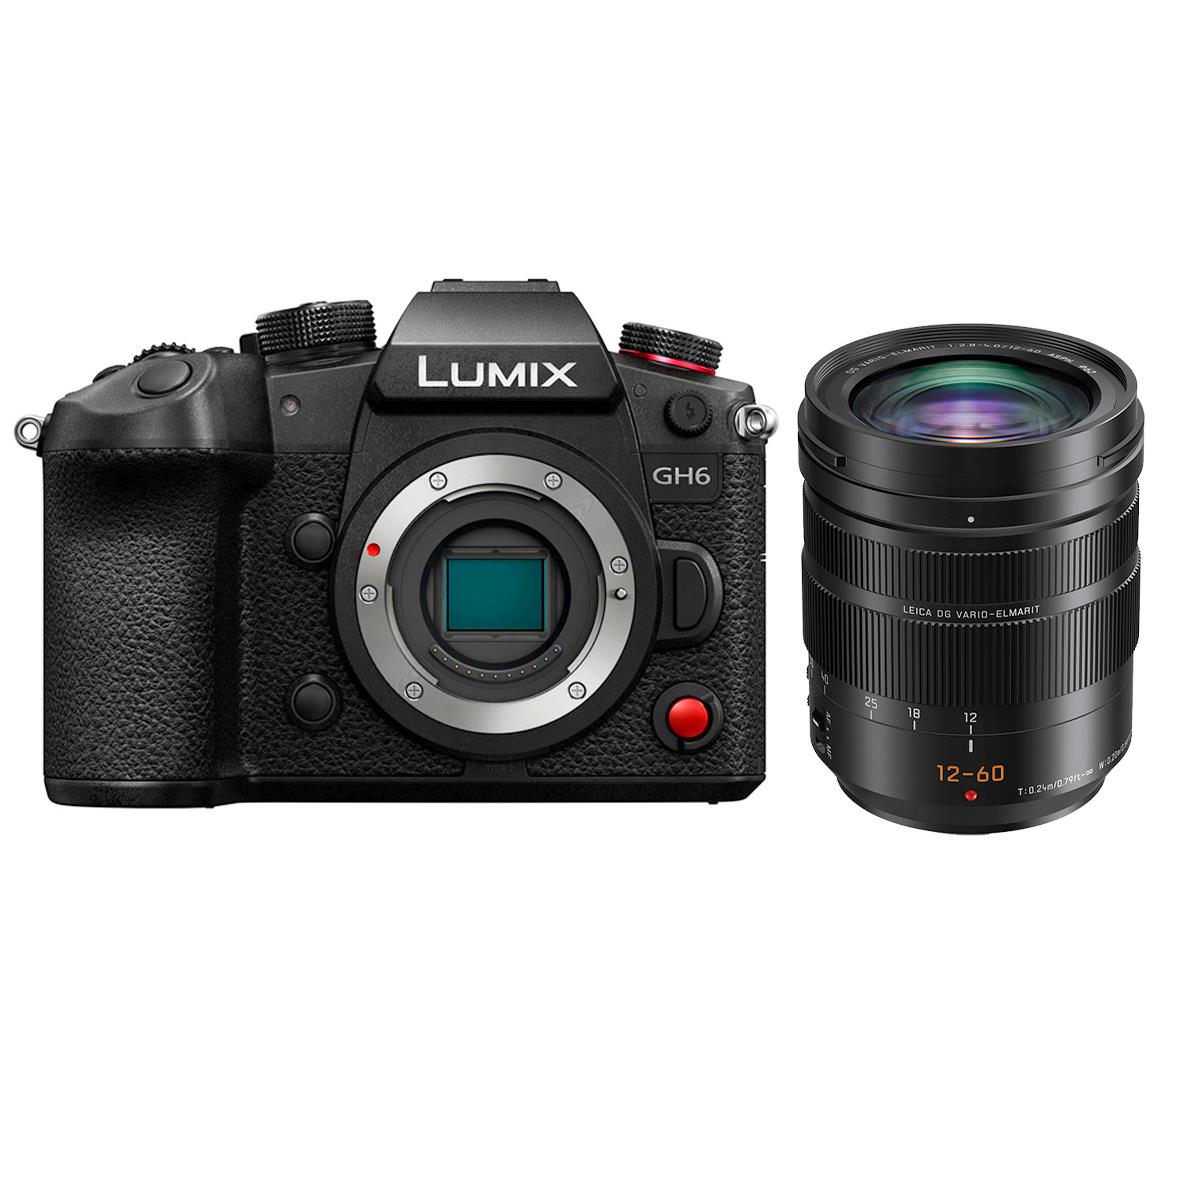 Image of Panasonic Lumix GH6 Mirrorless Camera with Leica DG 12-60mm f/2.8-4.0 Lens